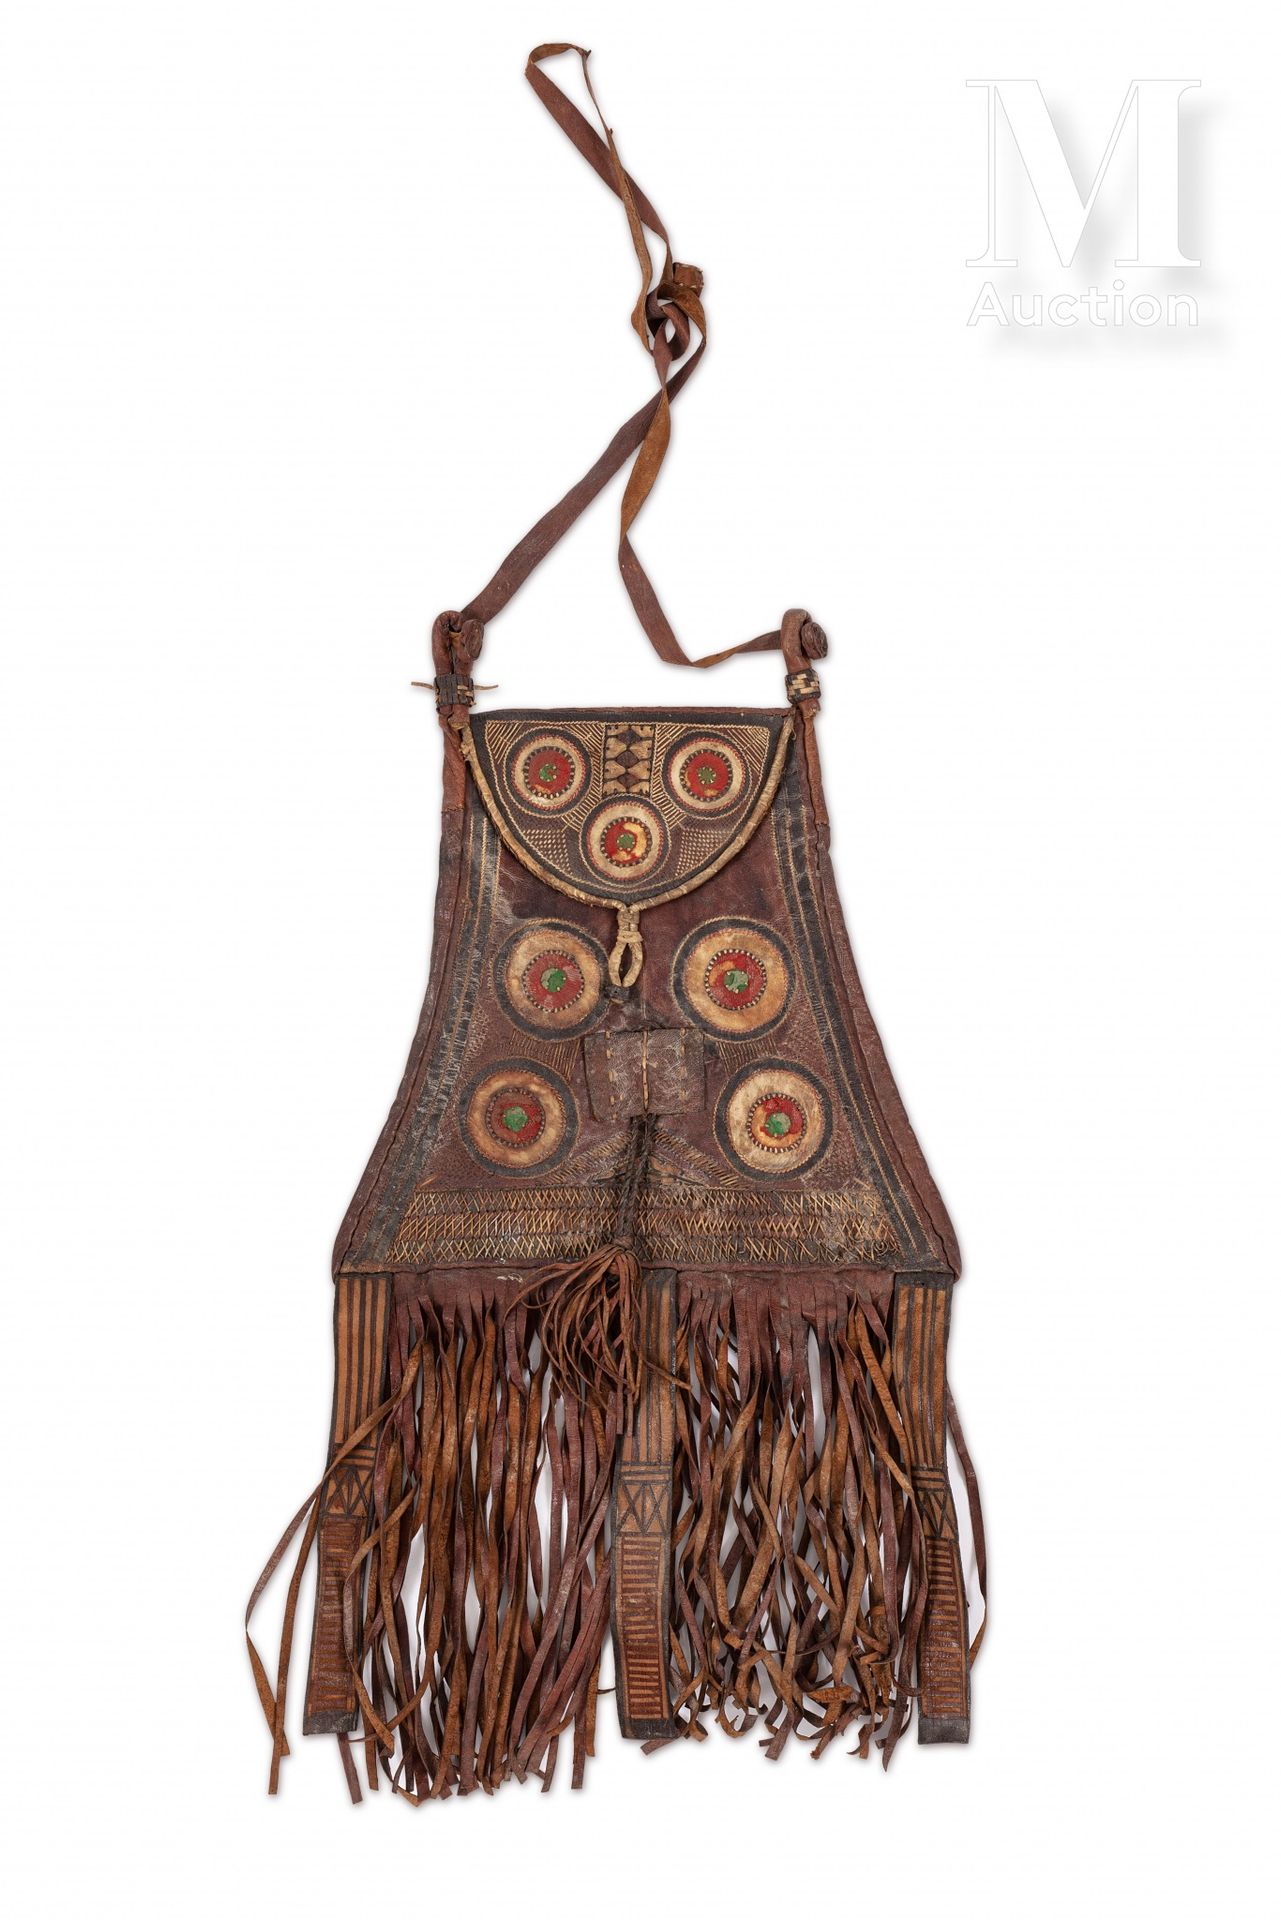 Sac du Sahel Mauritania or Western Sahara

Leather bag embroidered with palm lea&hellip;